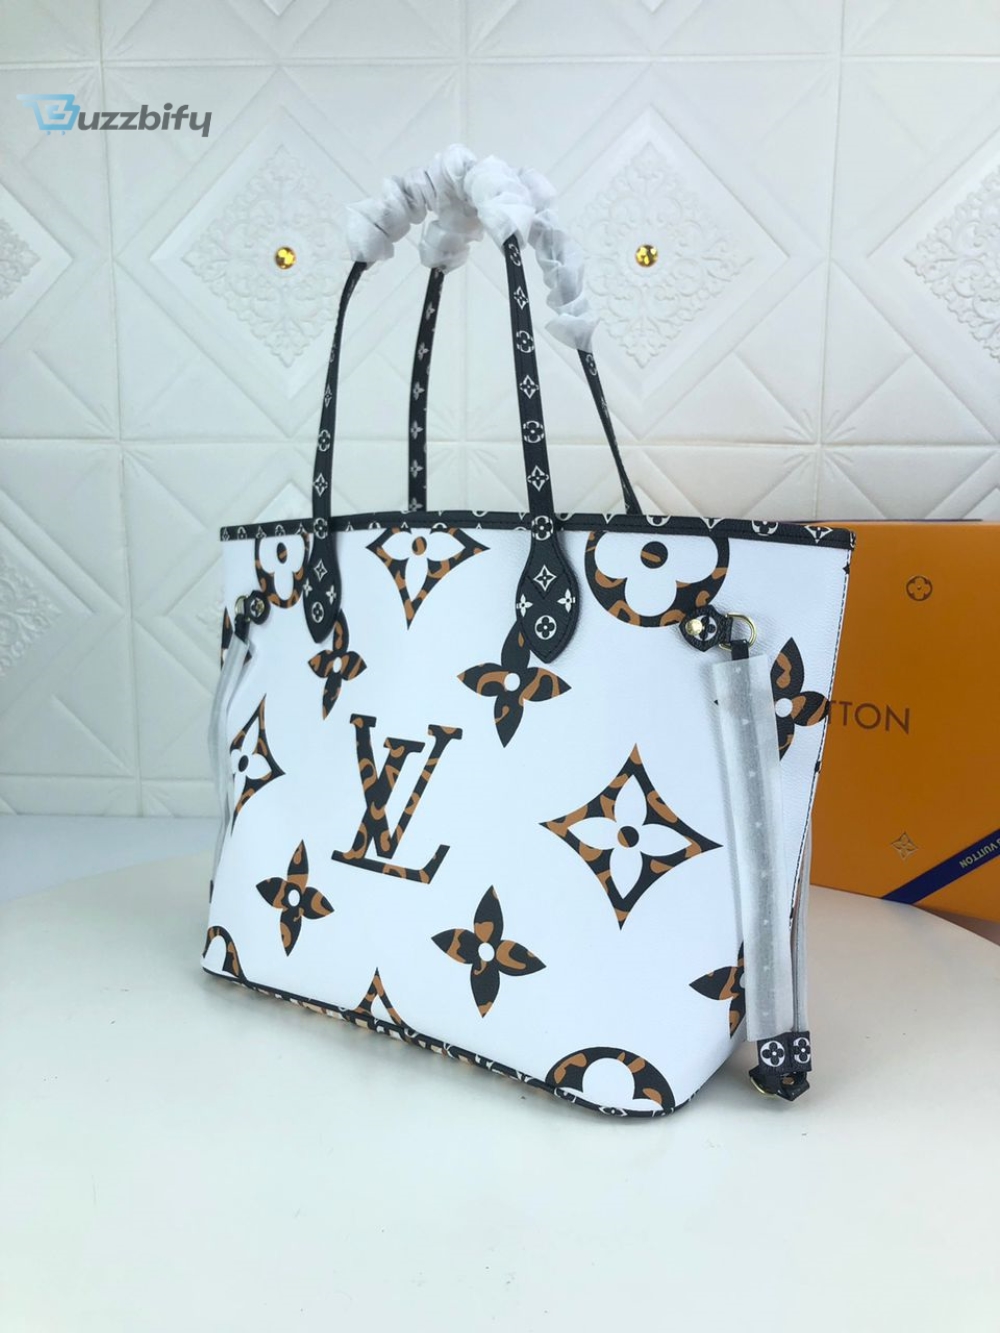 Louis Vuitton Neverfull MM Tote Bag Monogram Jungle Canvas Black/Caramel For Women, Women’s Handbags, Shoulder Bags 12.2in/31cm LV M44716